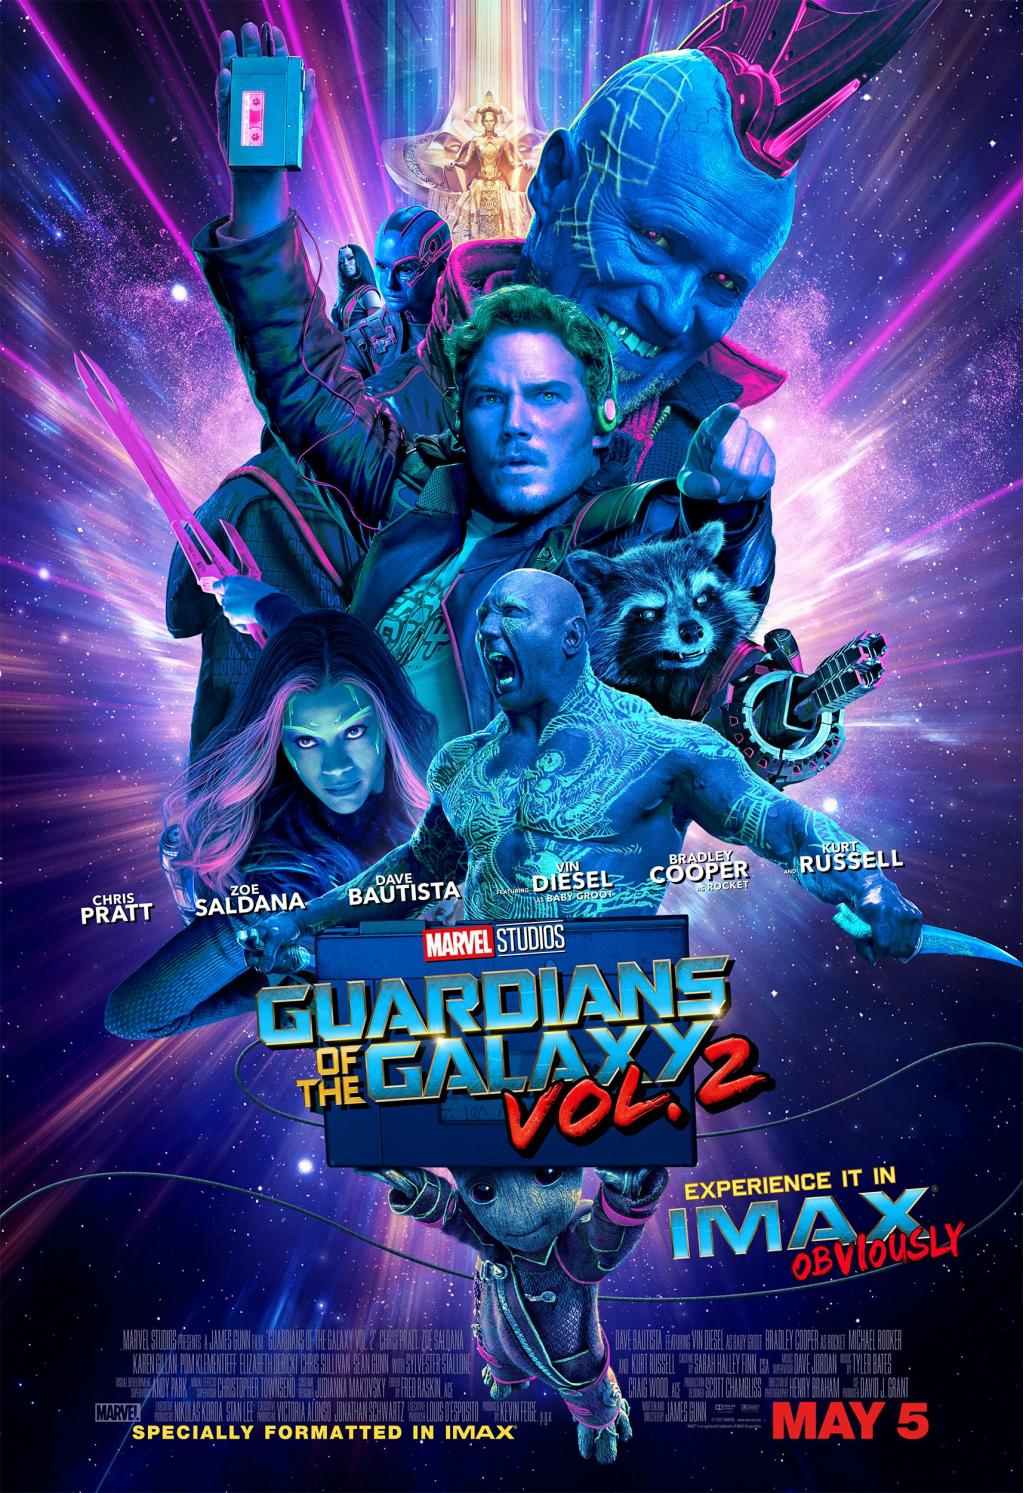 782948-guardians-of-the-galaxy-vol-2-imax-poster-1714x2500.jpg